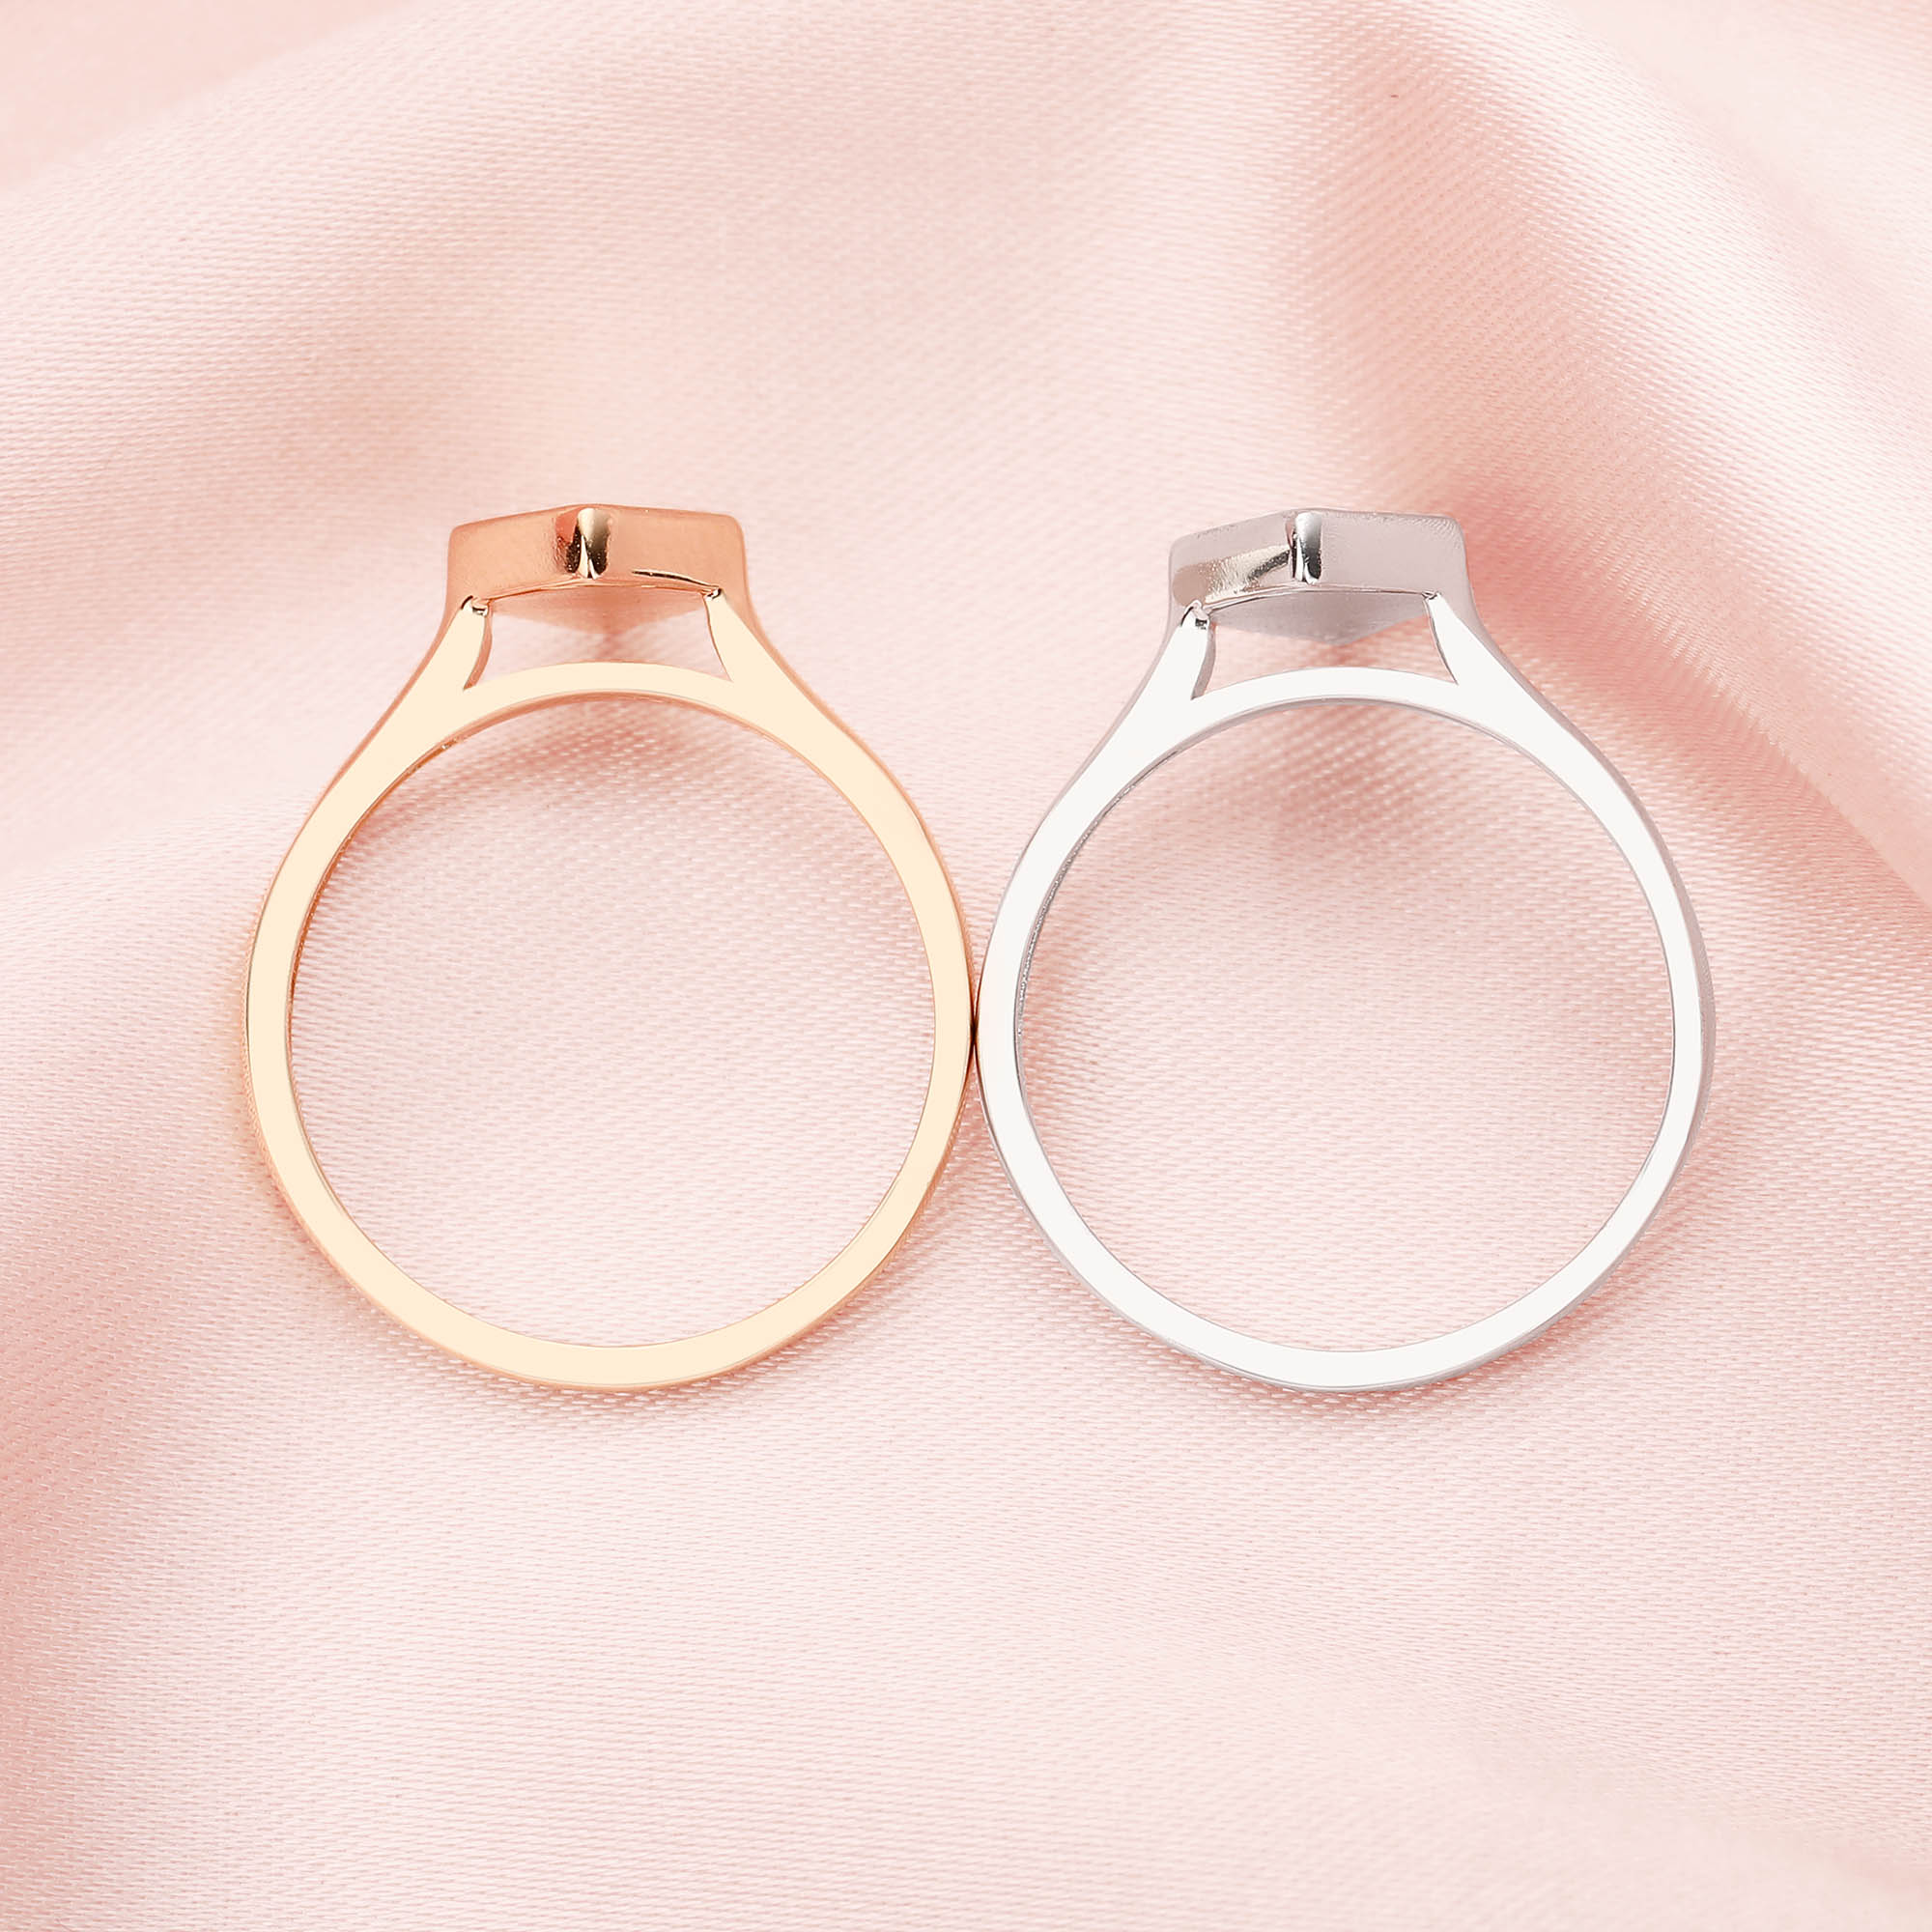 7x10MM Keepsake Breast Milk Resin Kite Cut Bezel Ring Settings,Solid 14K 18K Gold Ring,Simple Ring,DIY Ring Supplies 1294641 - Click Image to Close